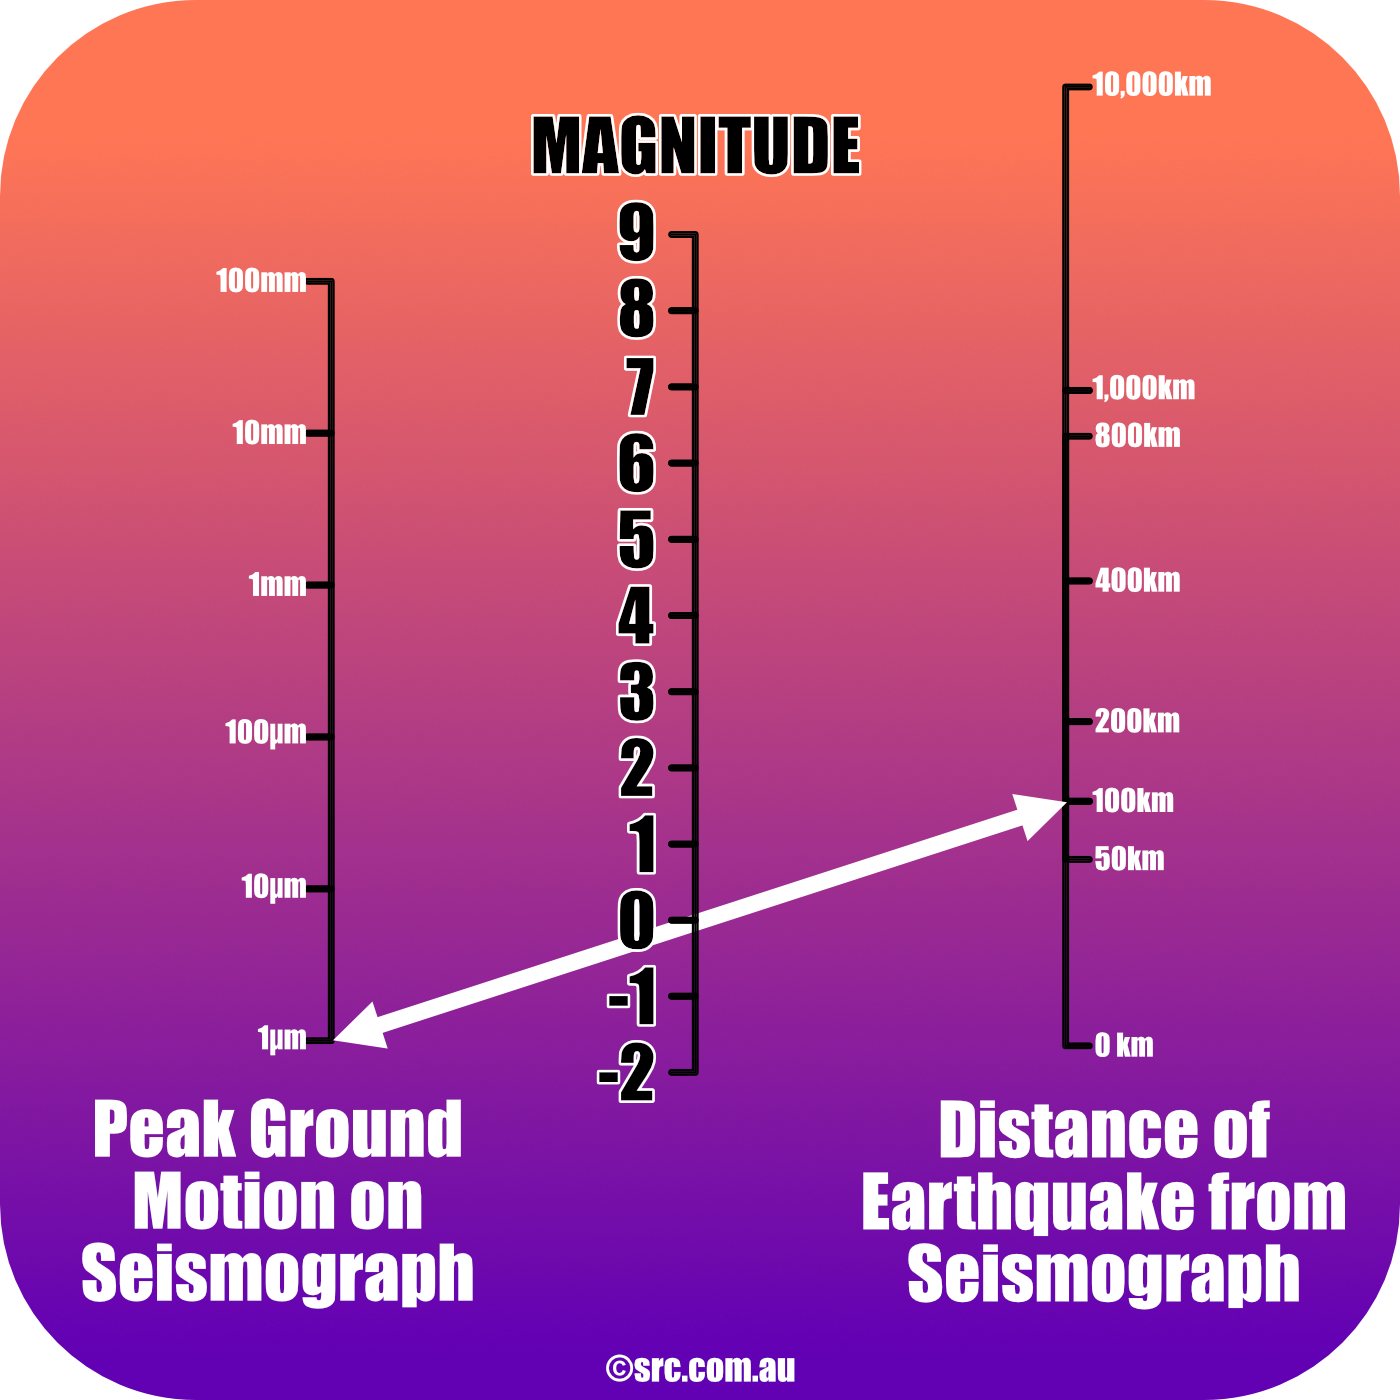 Richter scale, Seismology, Earthquake Magnitude & Intensity